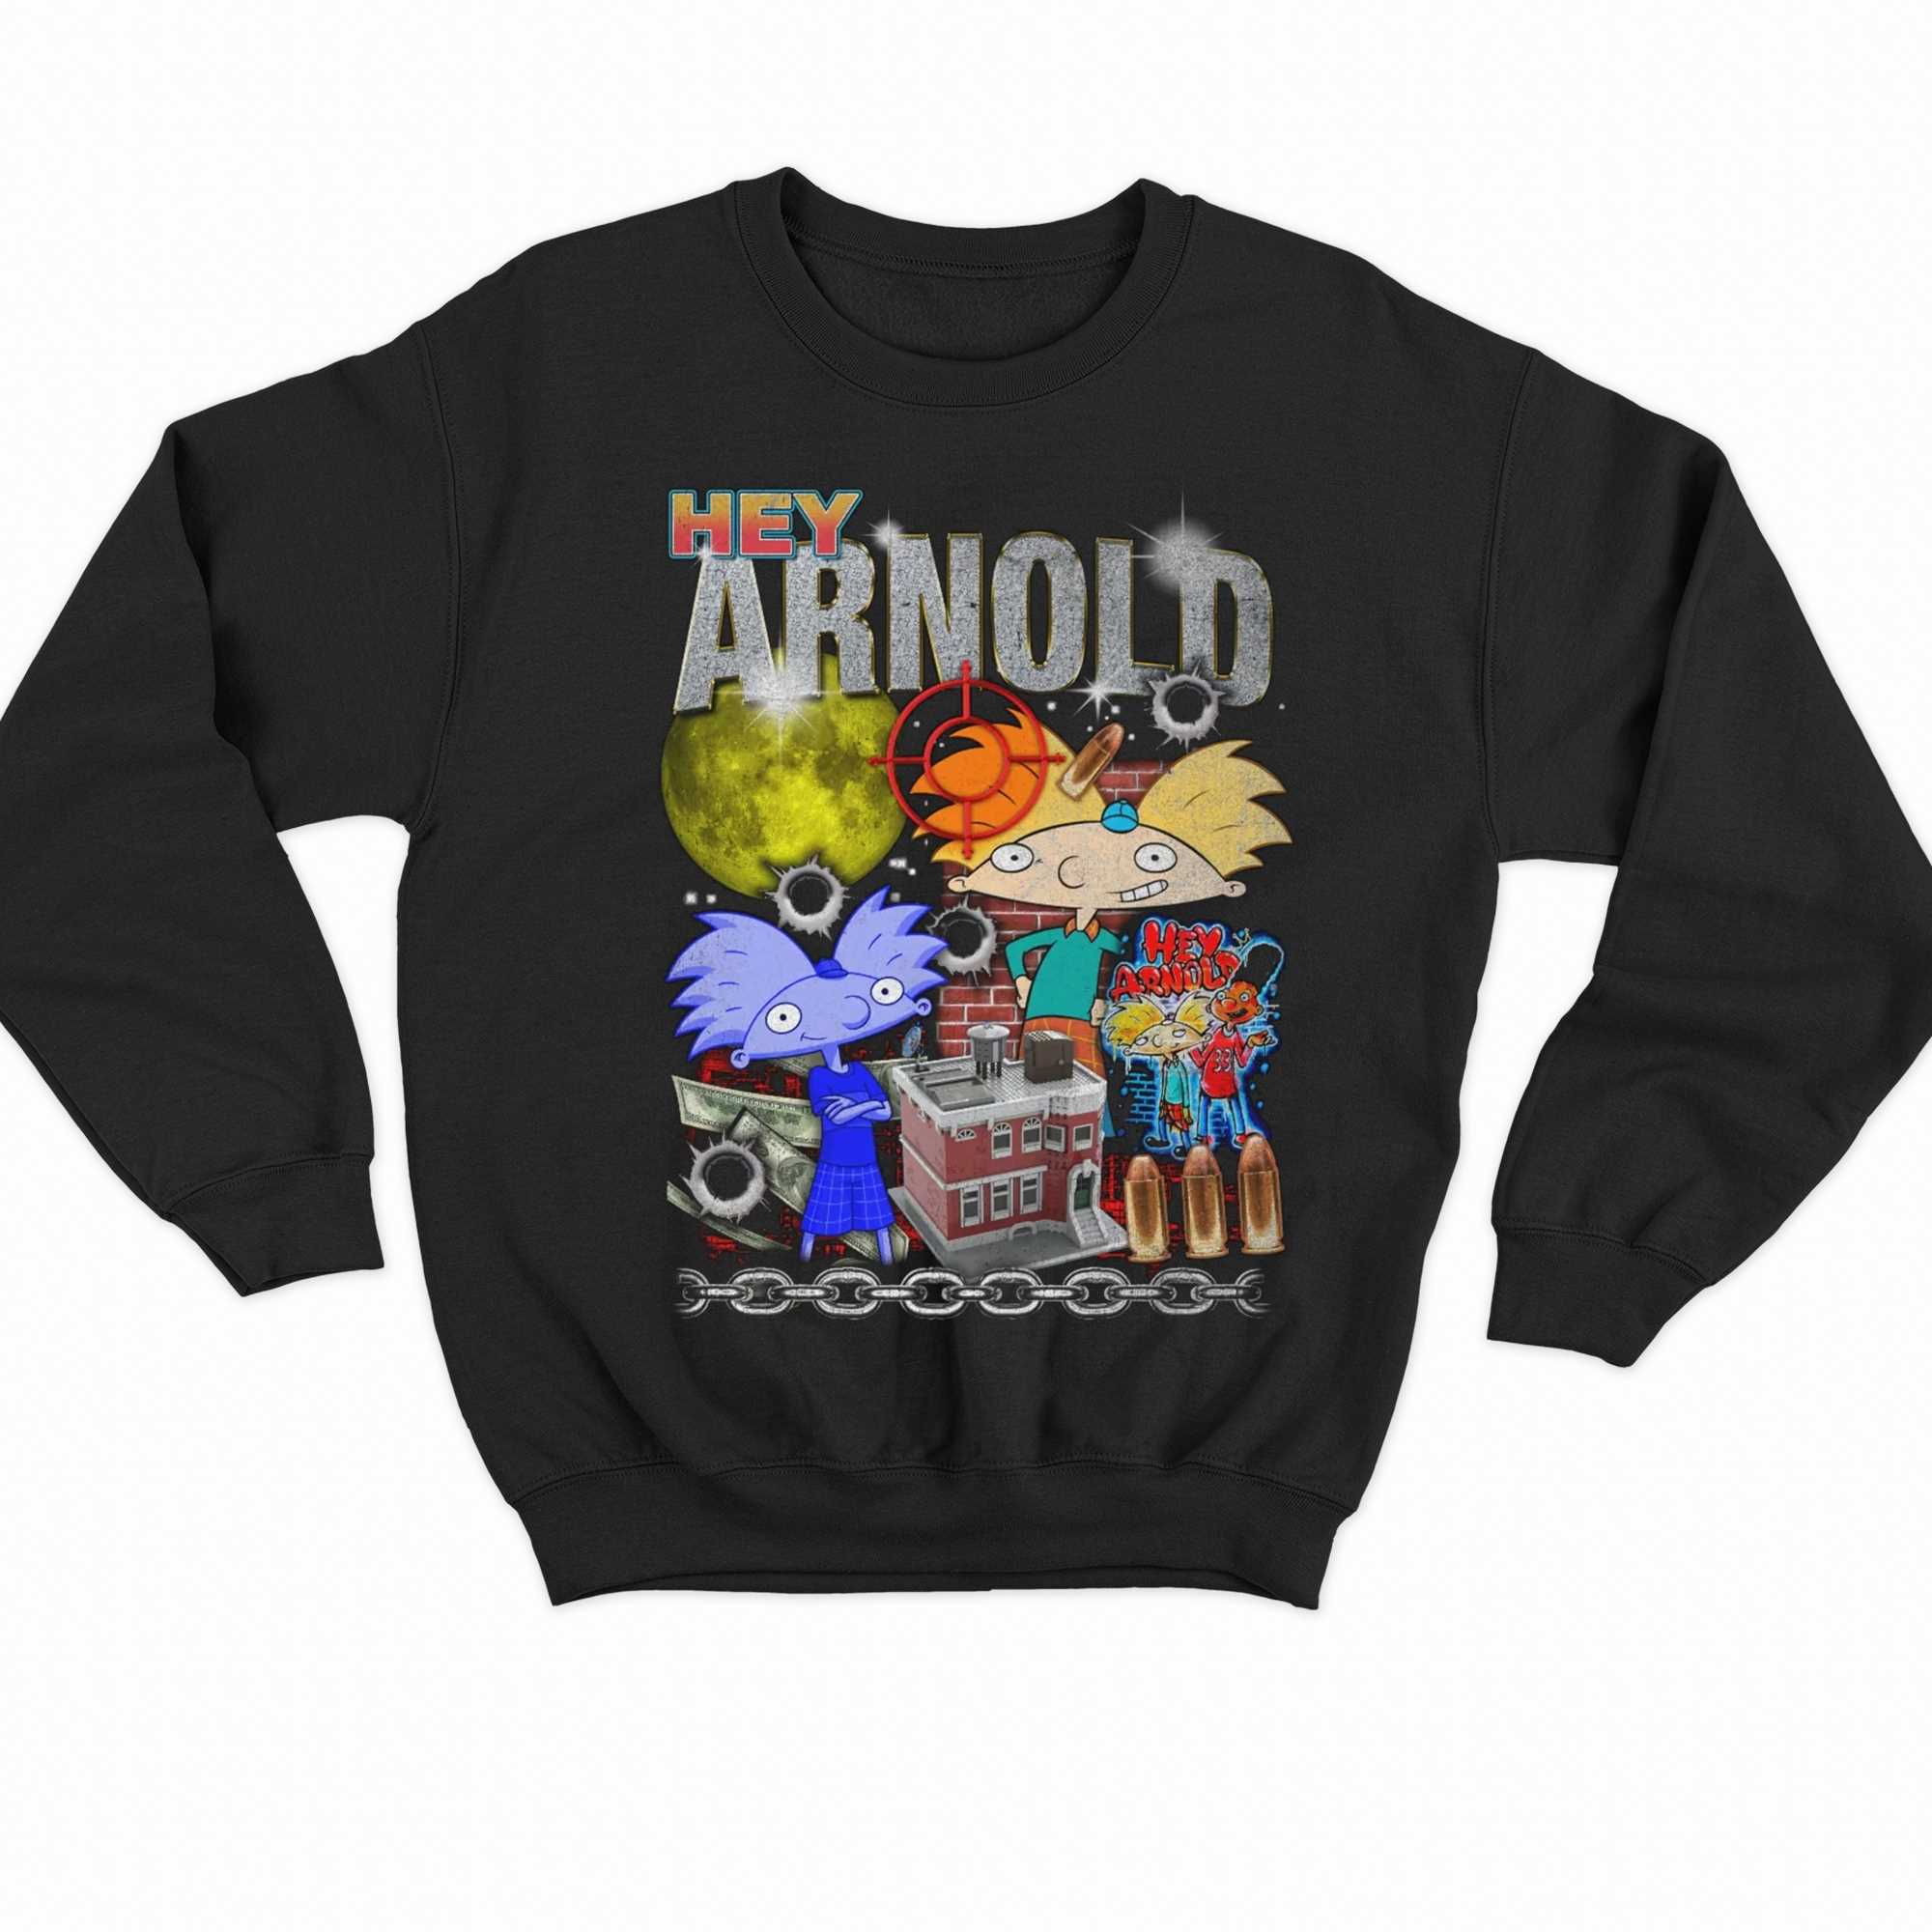 Hey Arnold T-shirt 